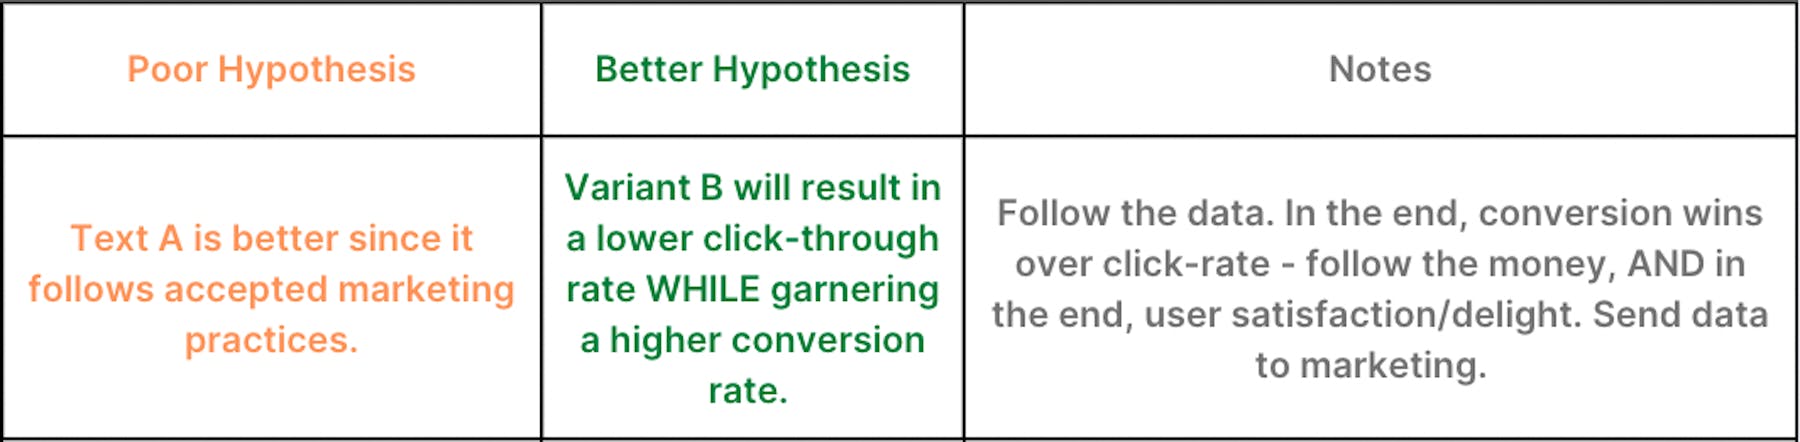 good vs bad hypothesis worksheet